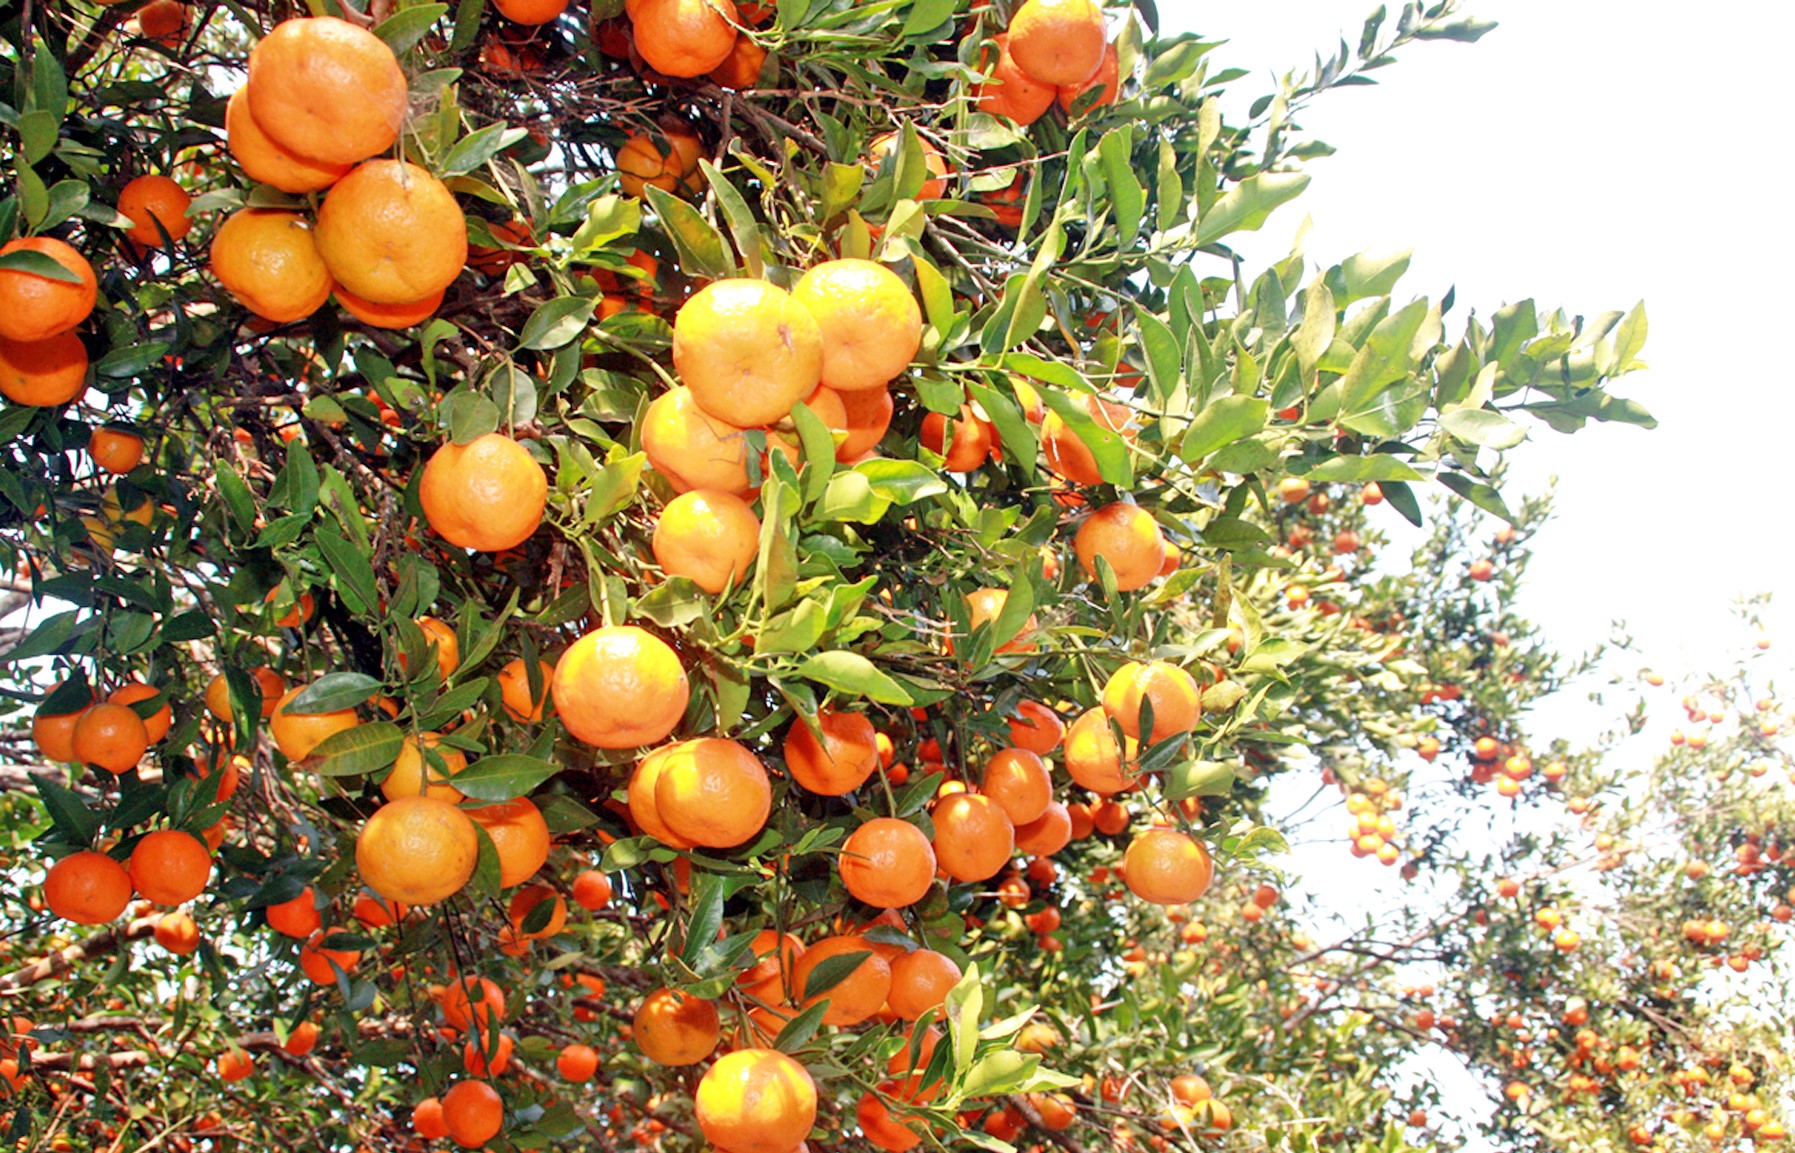 Gandaki province produces oranges worth Rs 2.7 billion this year